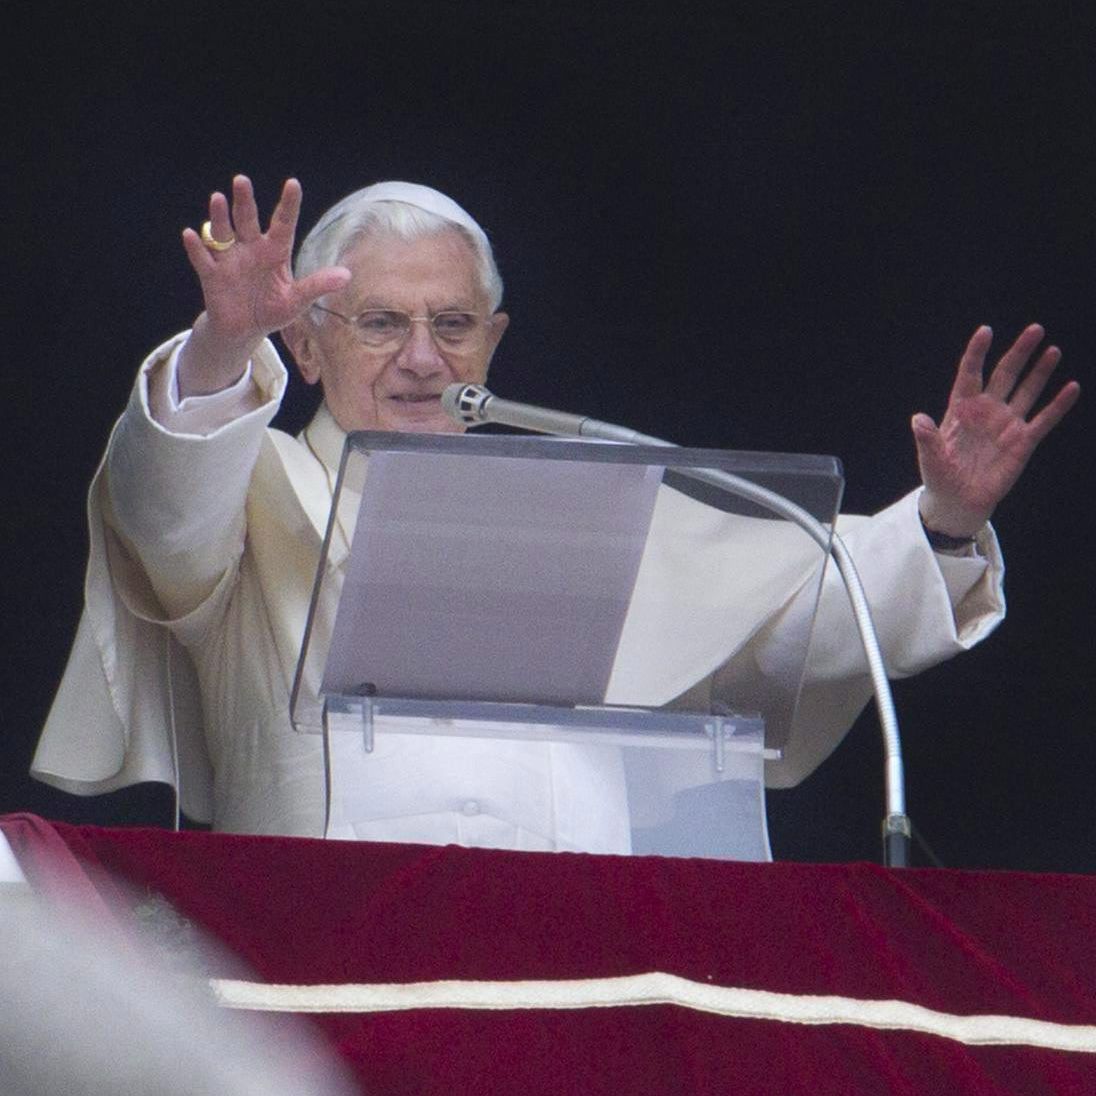 Папата обяви седем нови светци